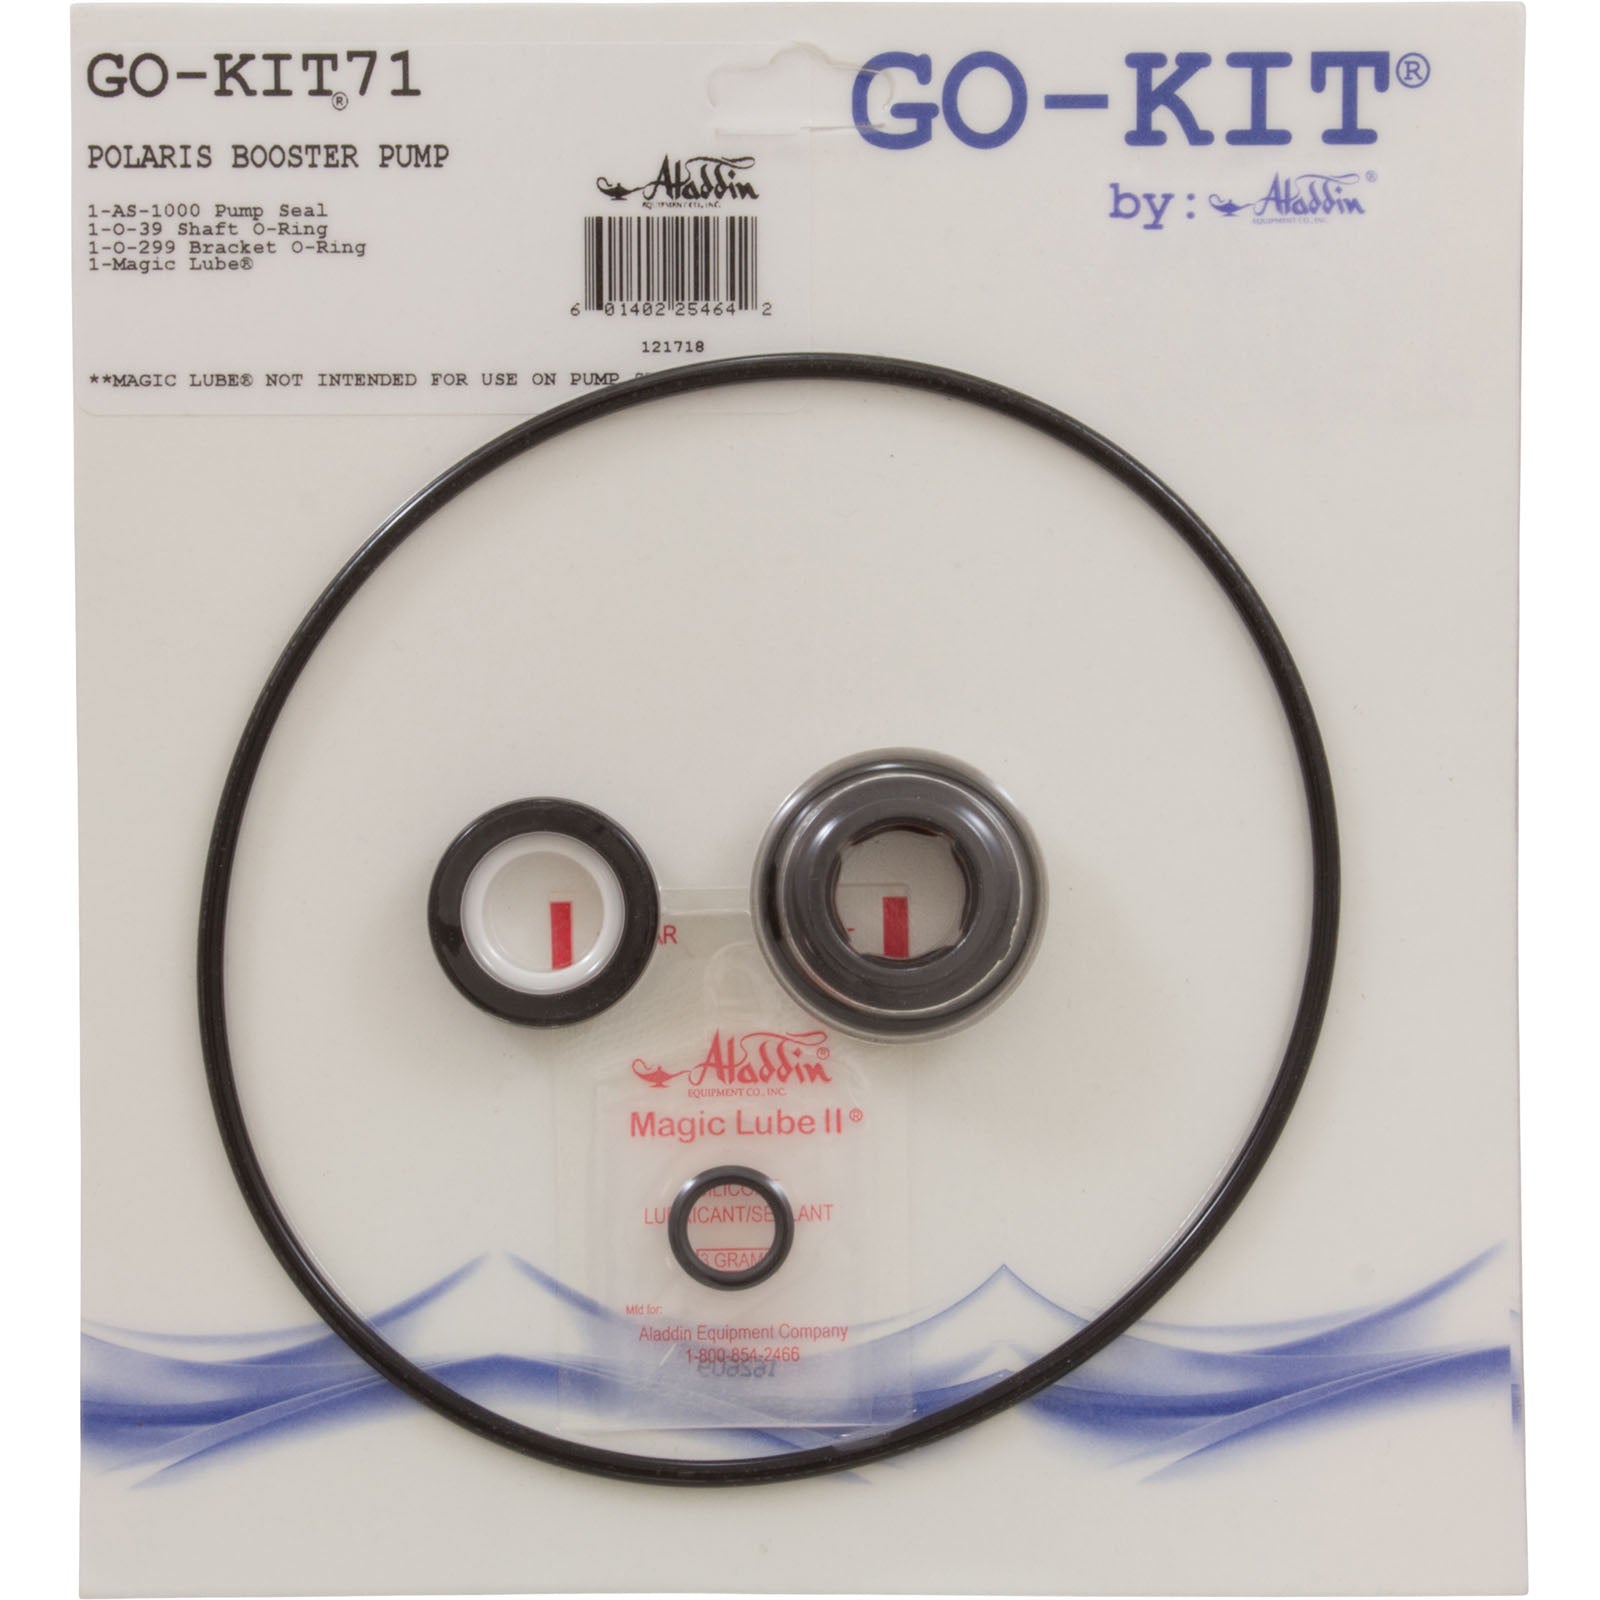 Go-Kit71, Polaris PB4 Booster Pump, Generic/ GOKIT71